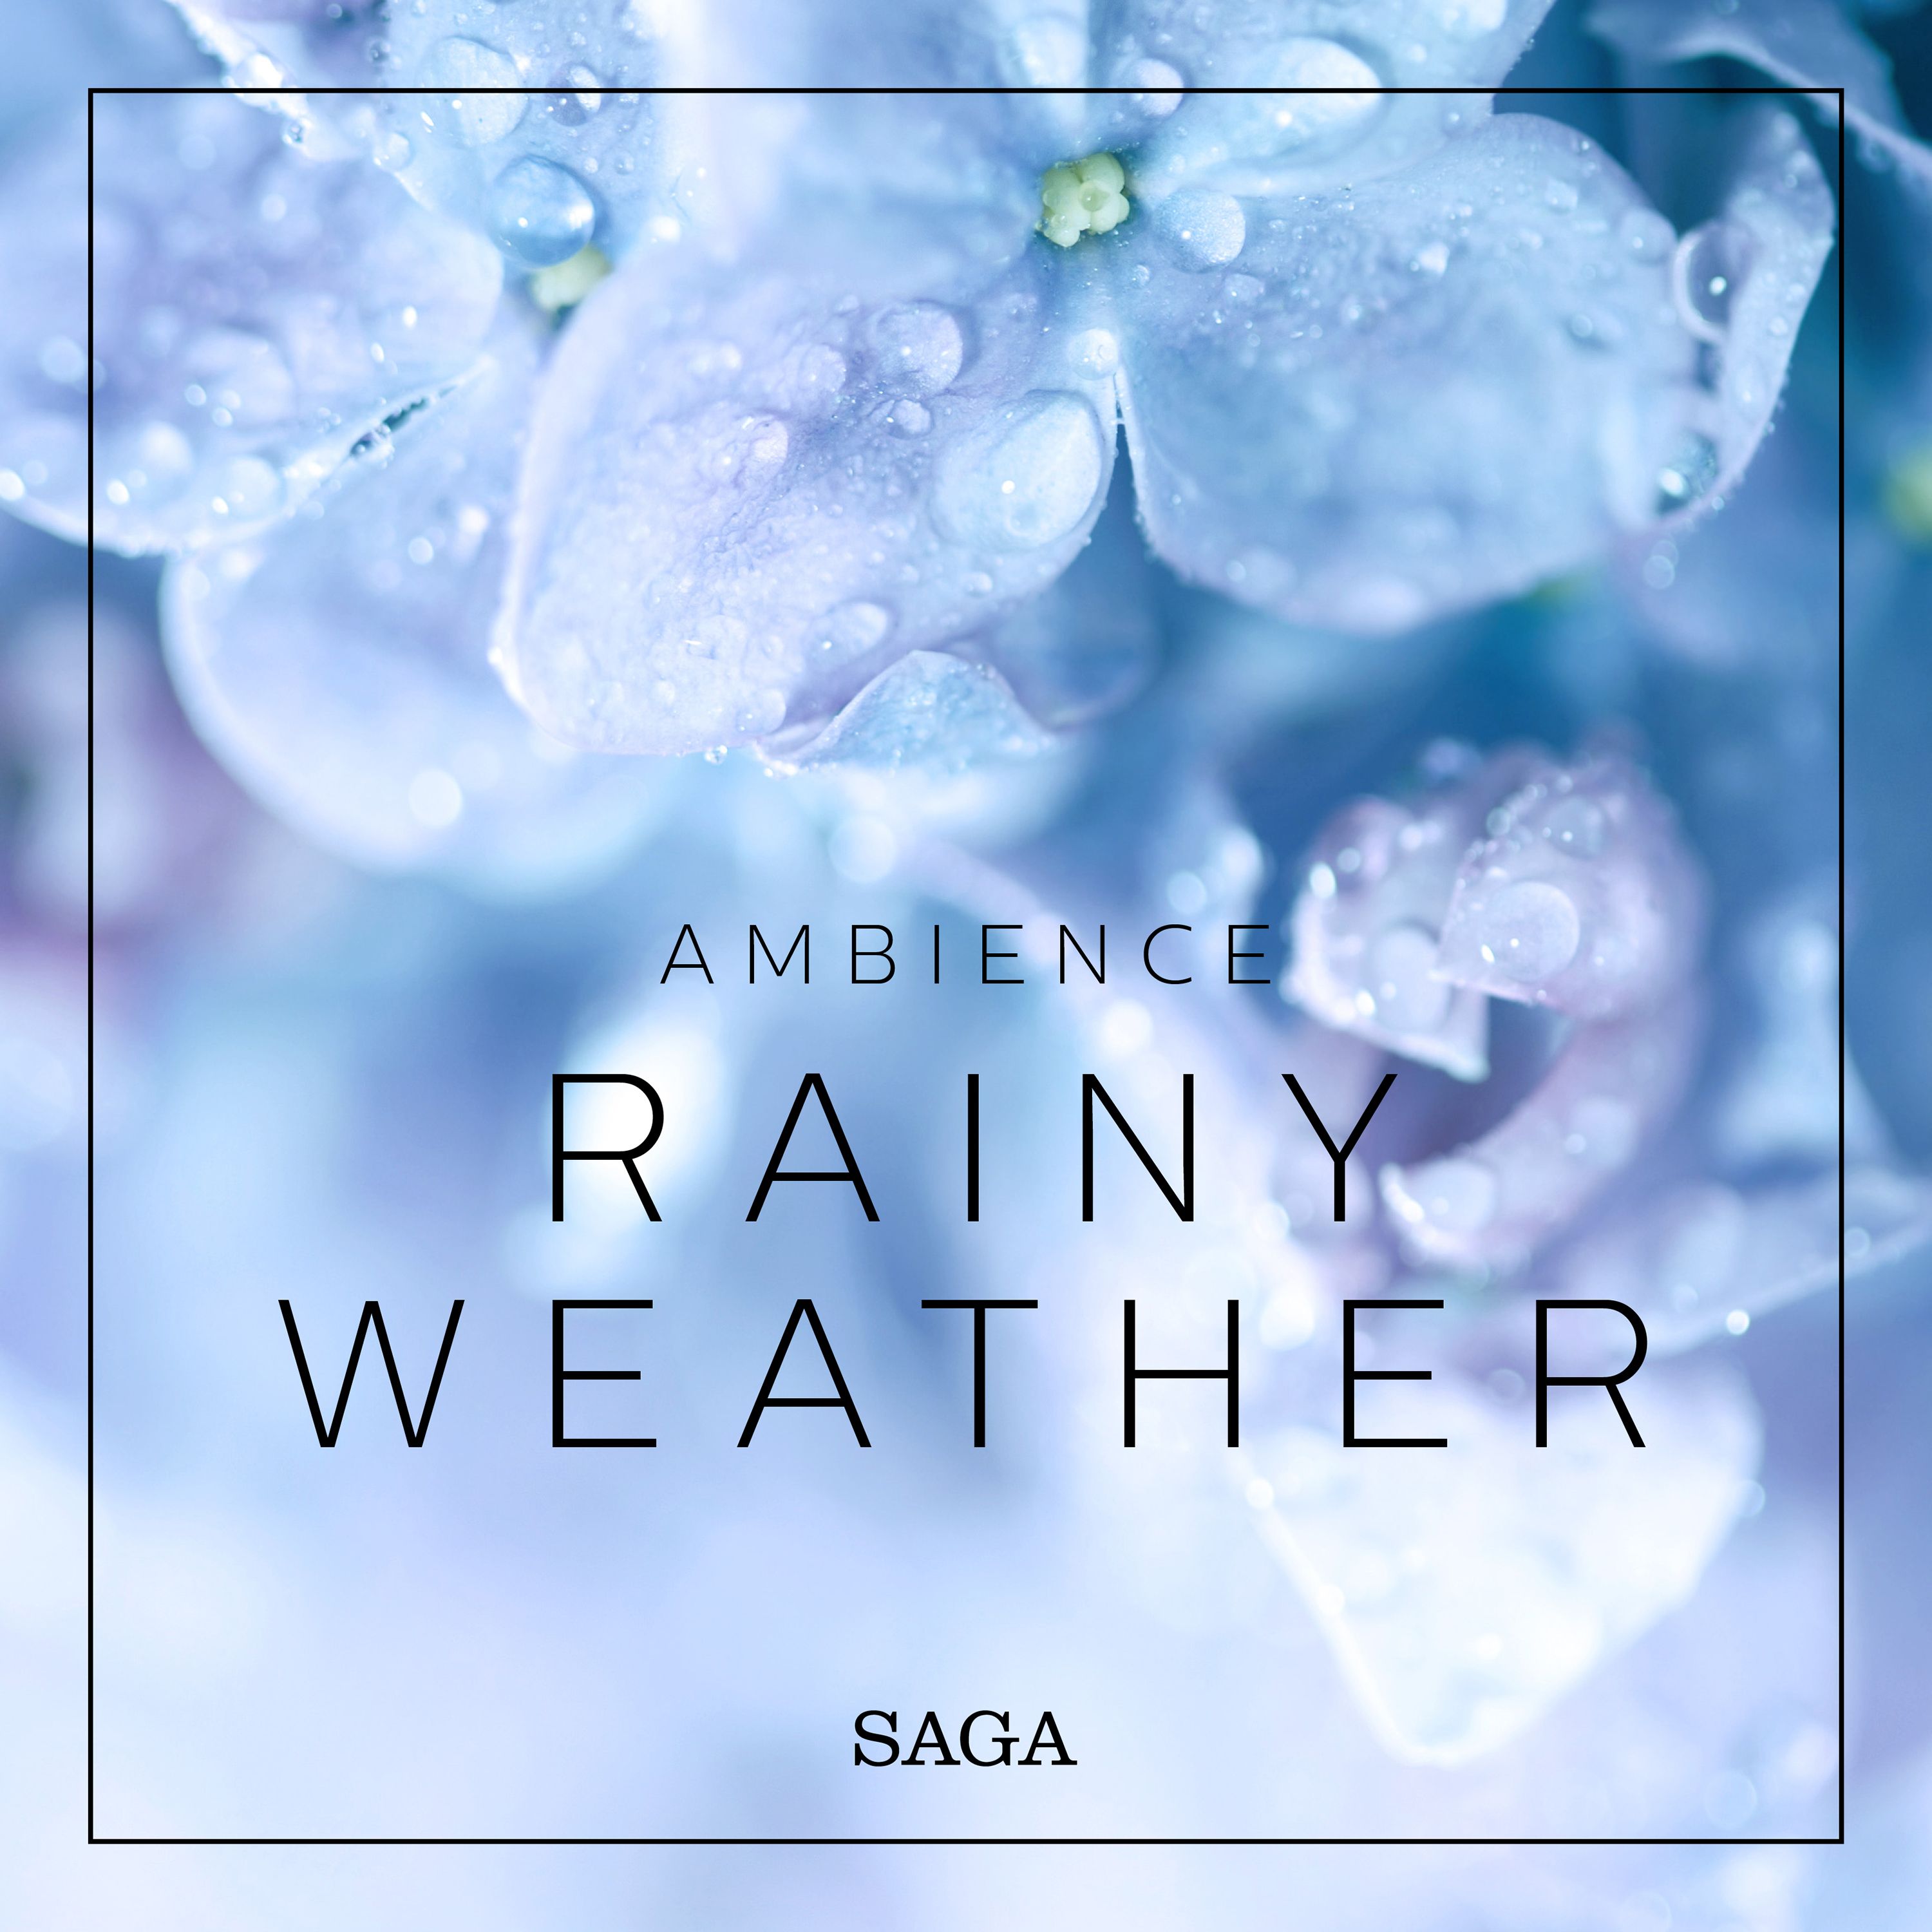 Ambience - Rainy Weather, ljudbok av Rasmus Broe